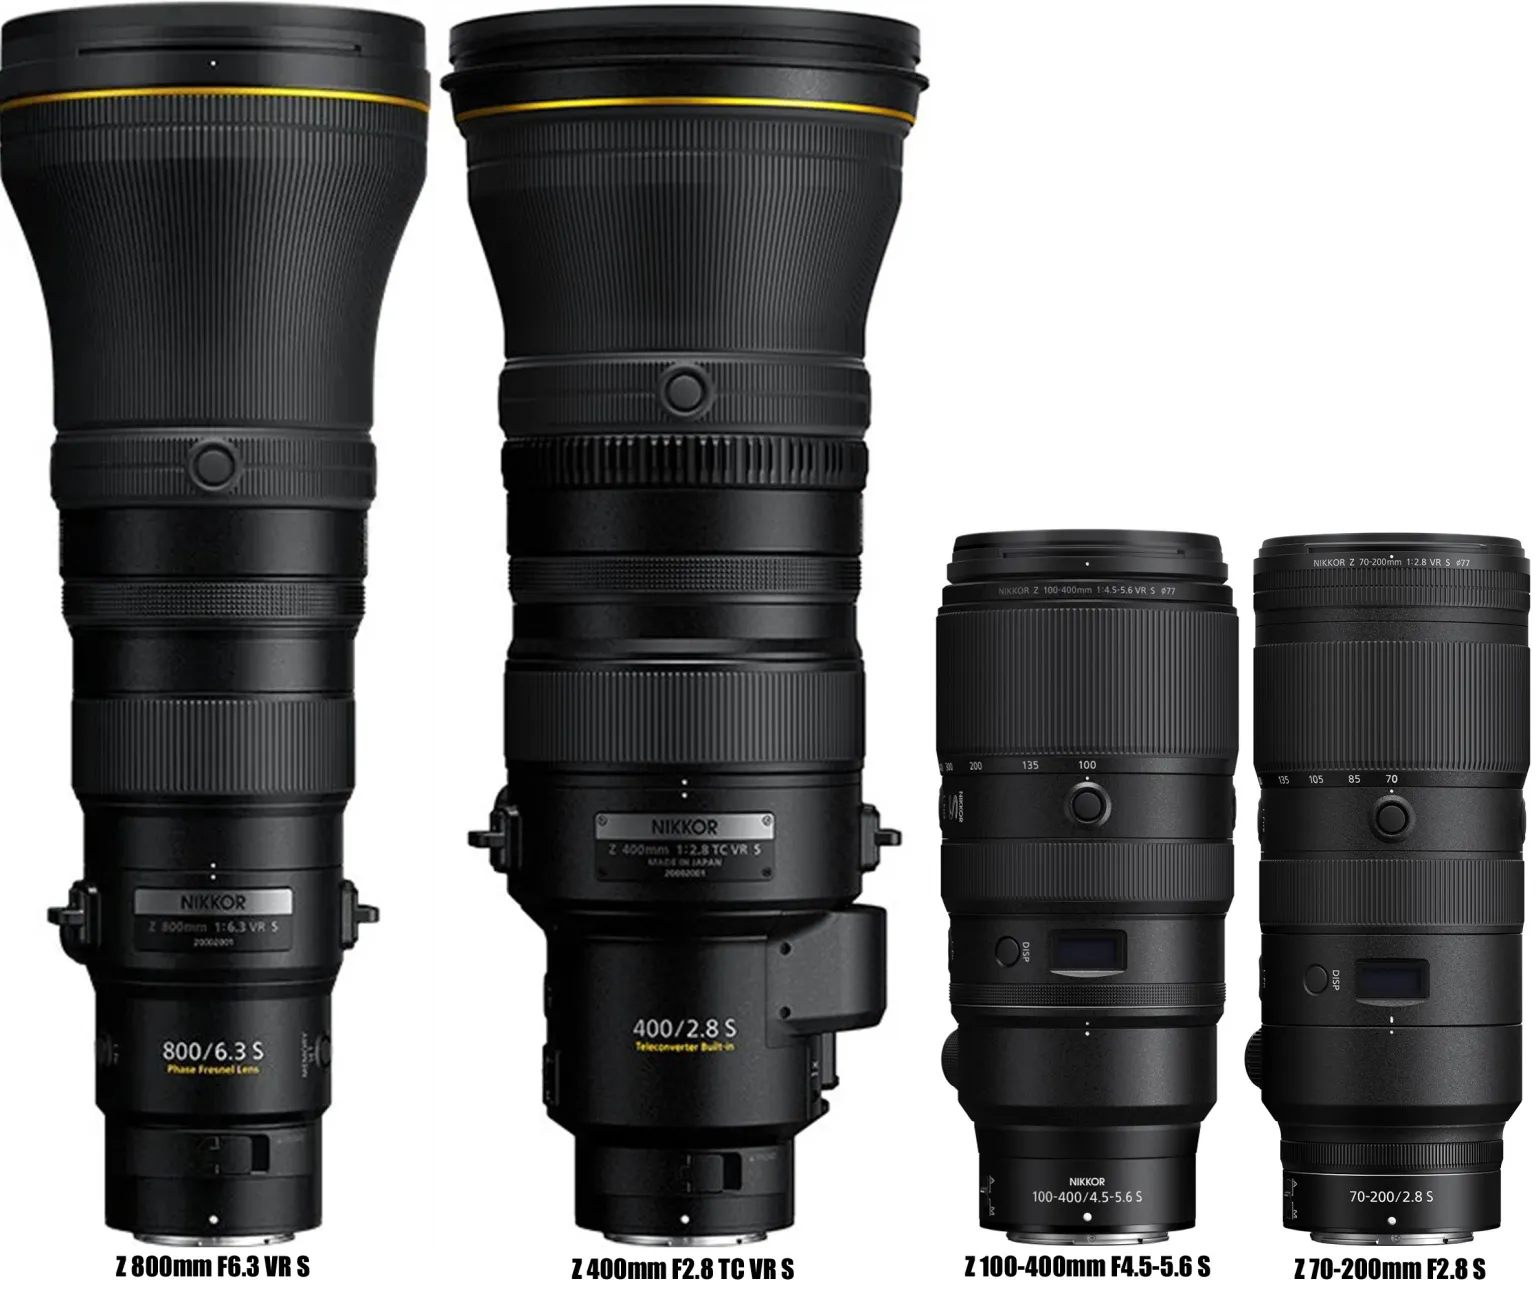 Nikon Nikkor Z 800mm f/6.3 VR PF S lens additional coverage